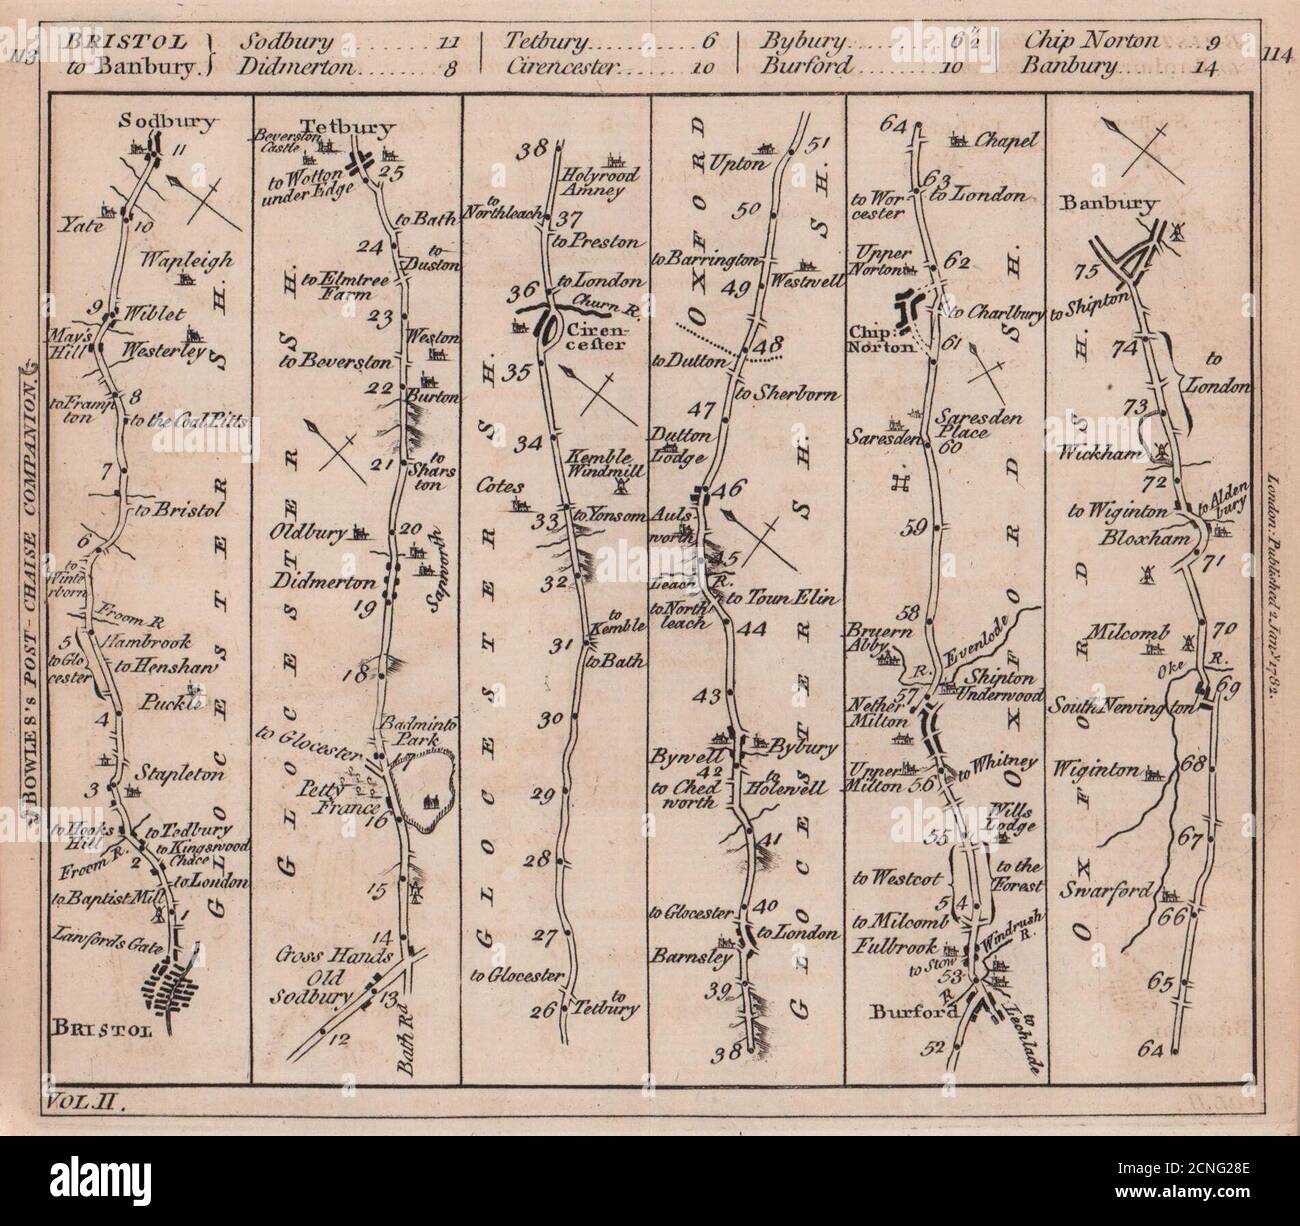 Bristol-Cirencester-Chipping Norton-Banbury road strip map. BOWLES 1782 Stock Photo